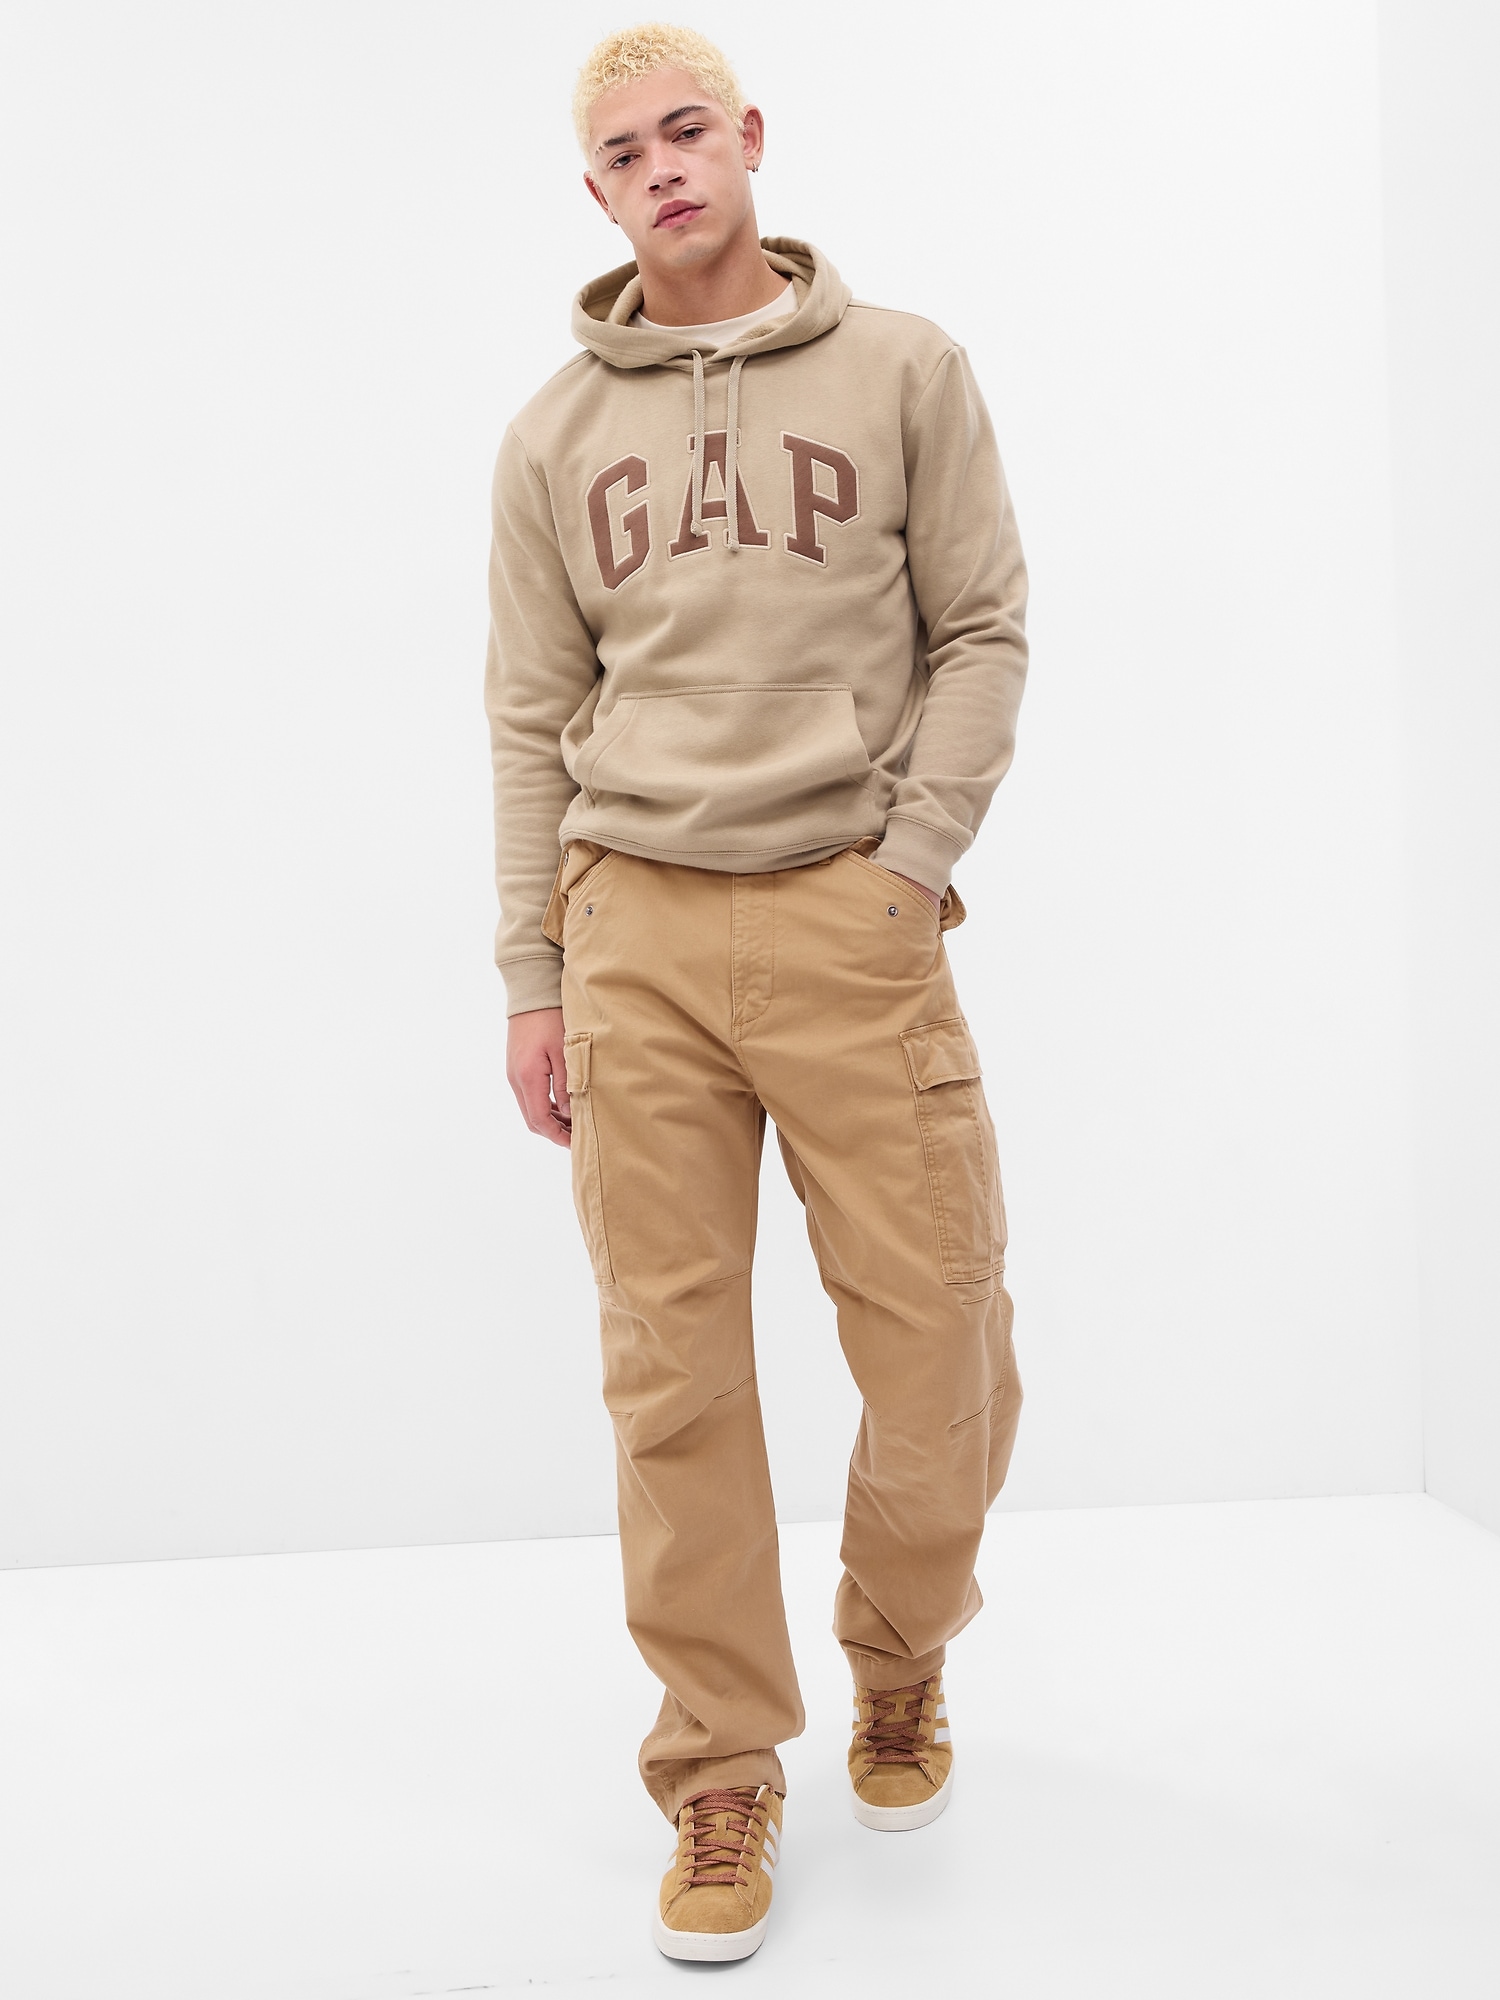 Gap Mens Skinny Khaki Chino Pants 32x30 Brown Flat Front Casual Twill 2  Pairs | eBay